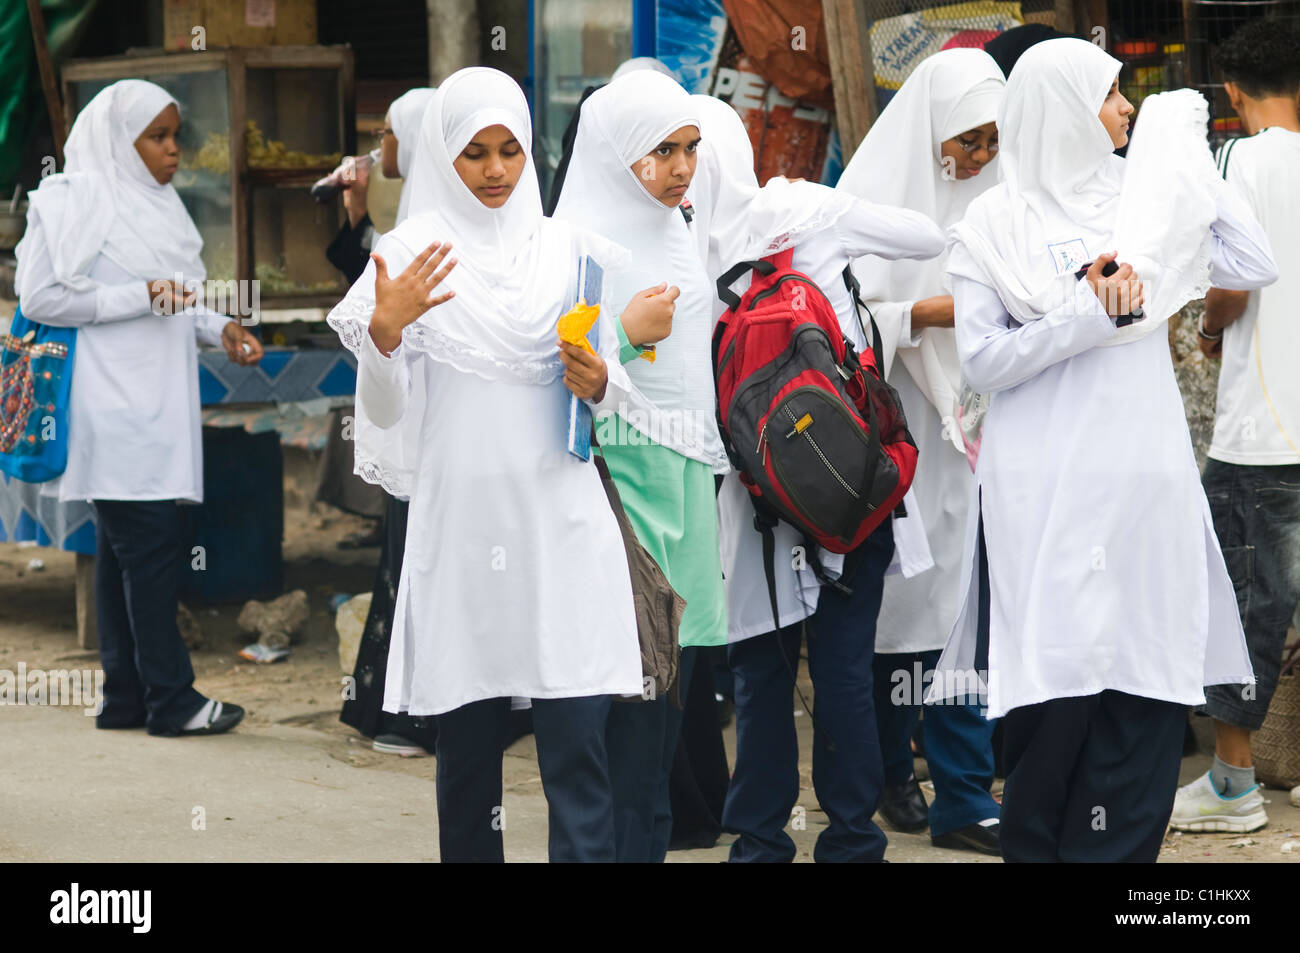 Street scene with schoolgirls, Zanzibar, Tanzania Stock Photo